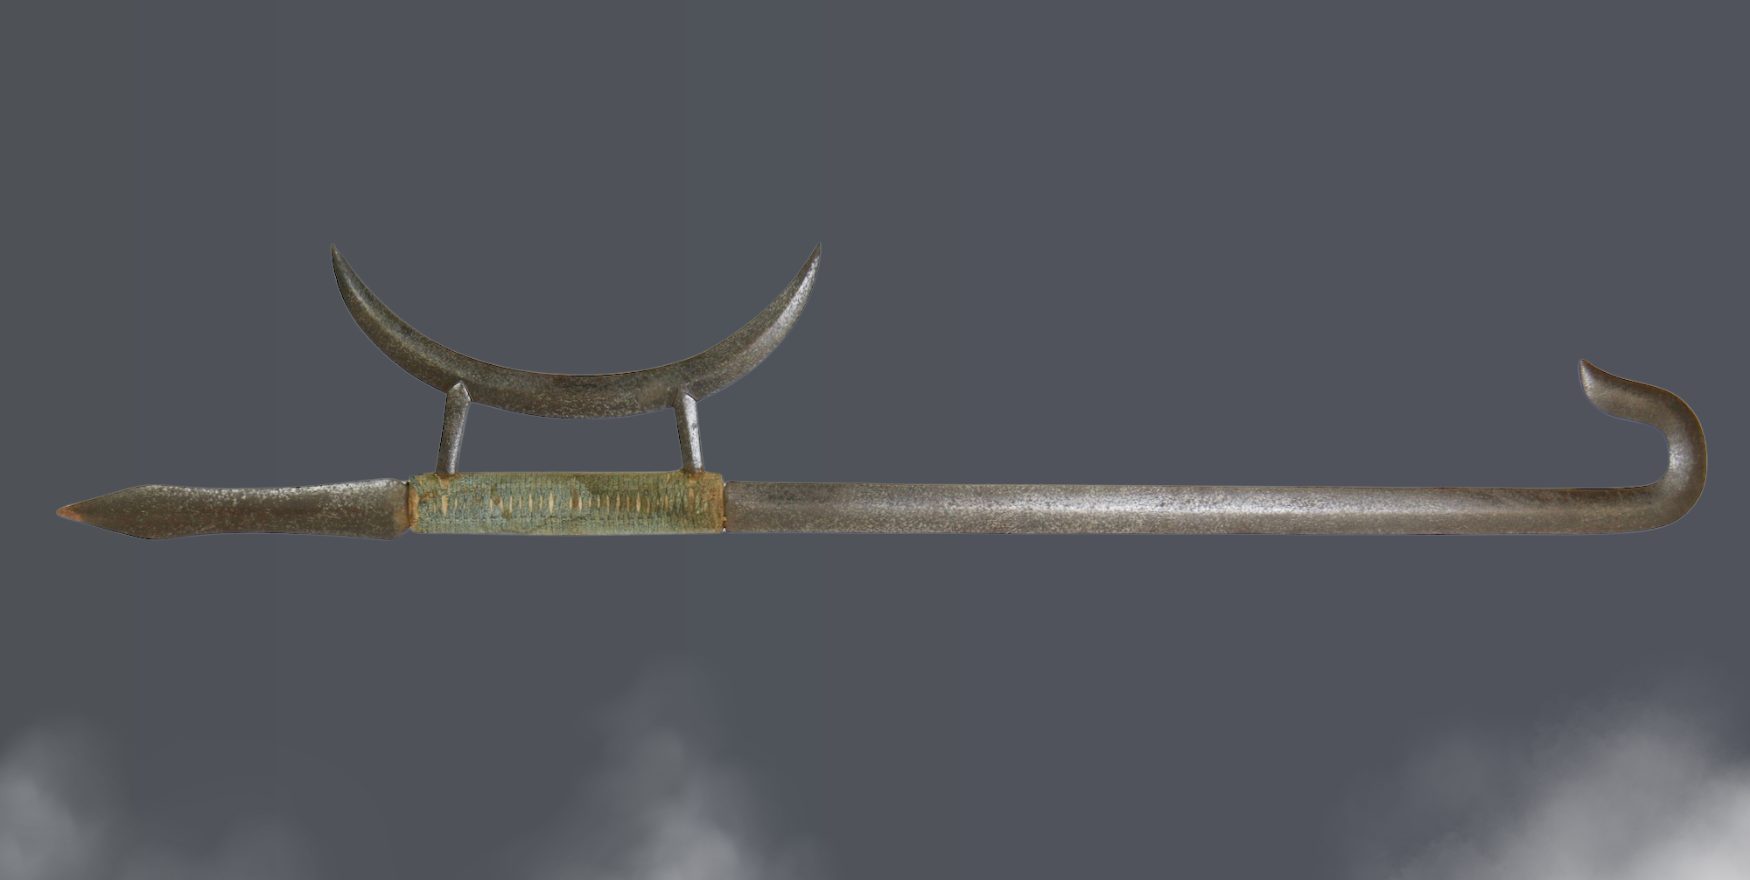 Chinese hook sword